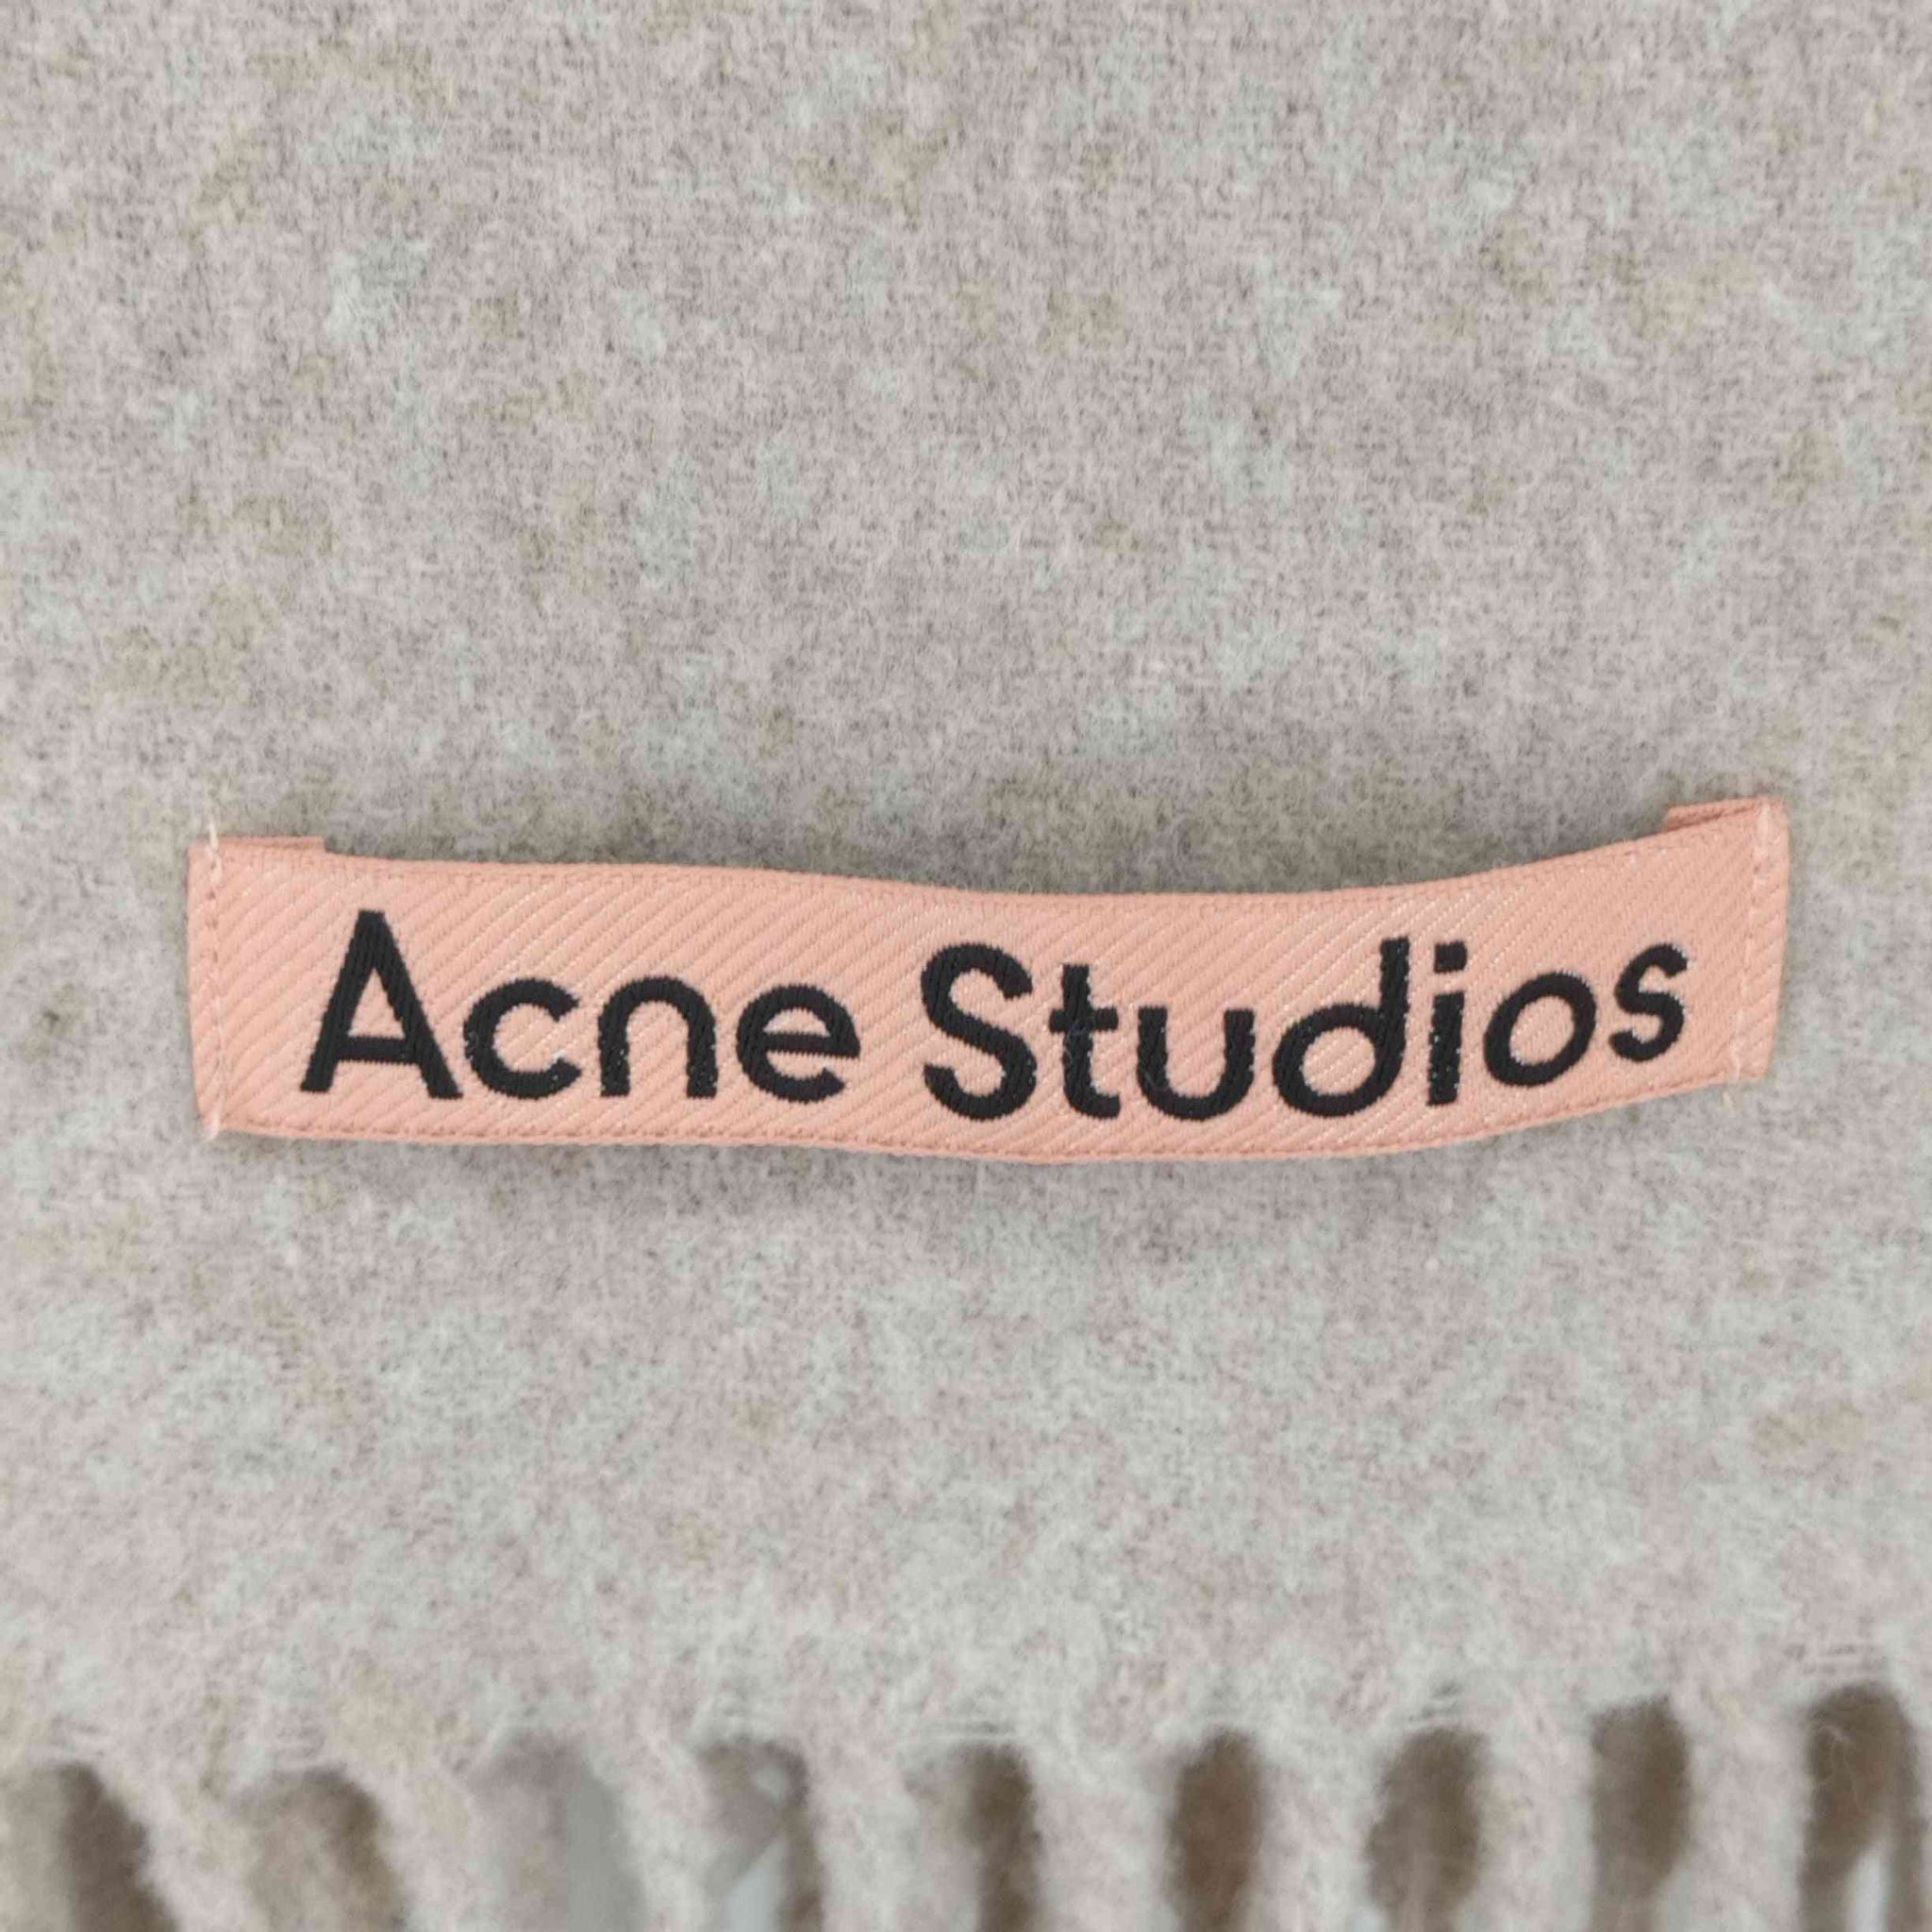 ACNE STUDIOS(アクネストゥディオズ)フリンジウールスカーフ - オーバーサイズ 200x70cm